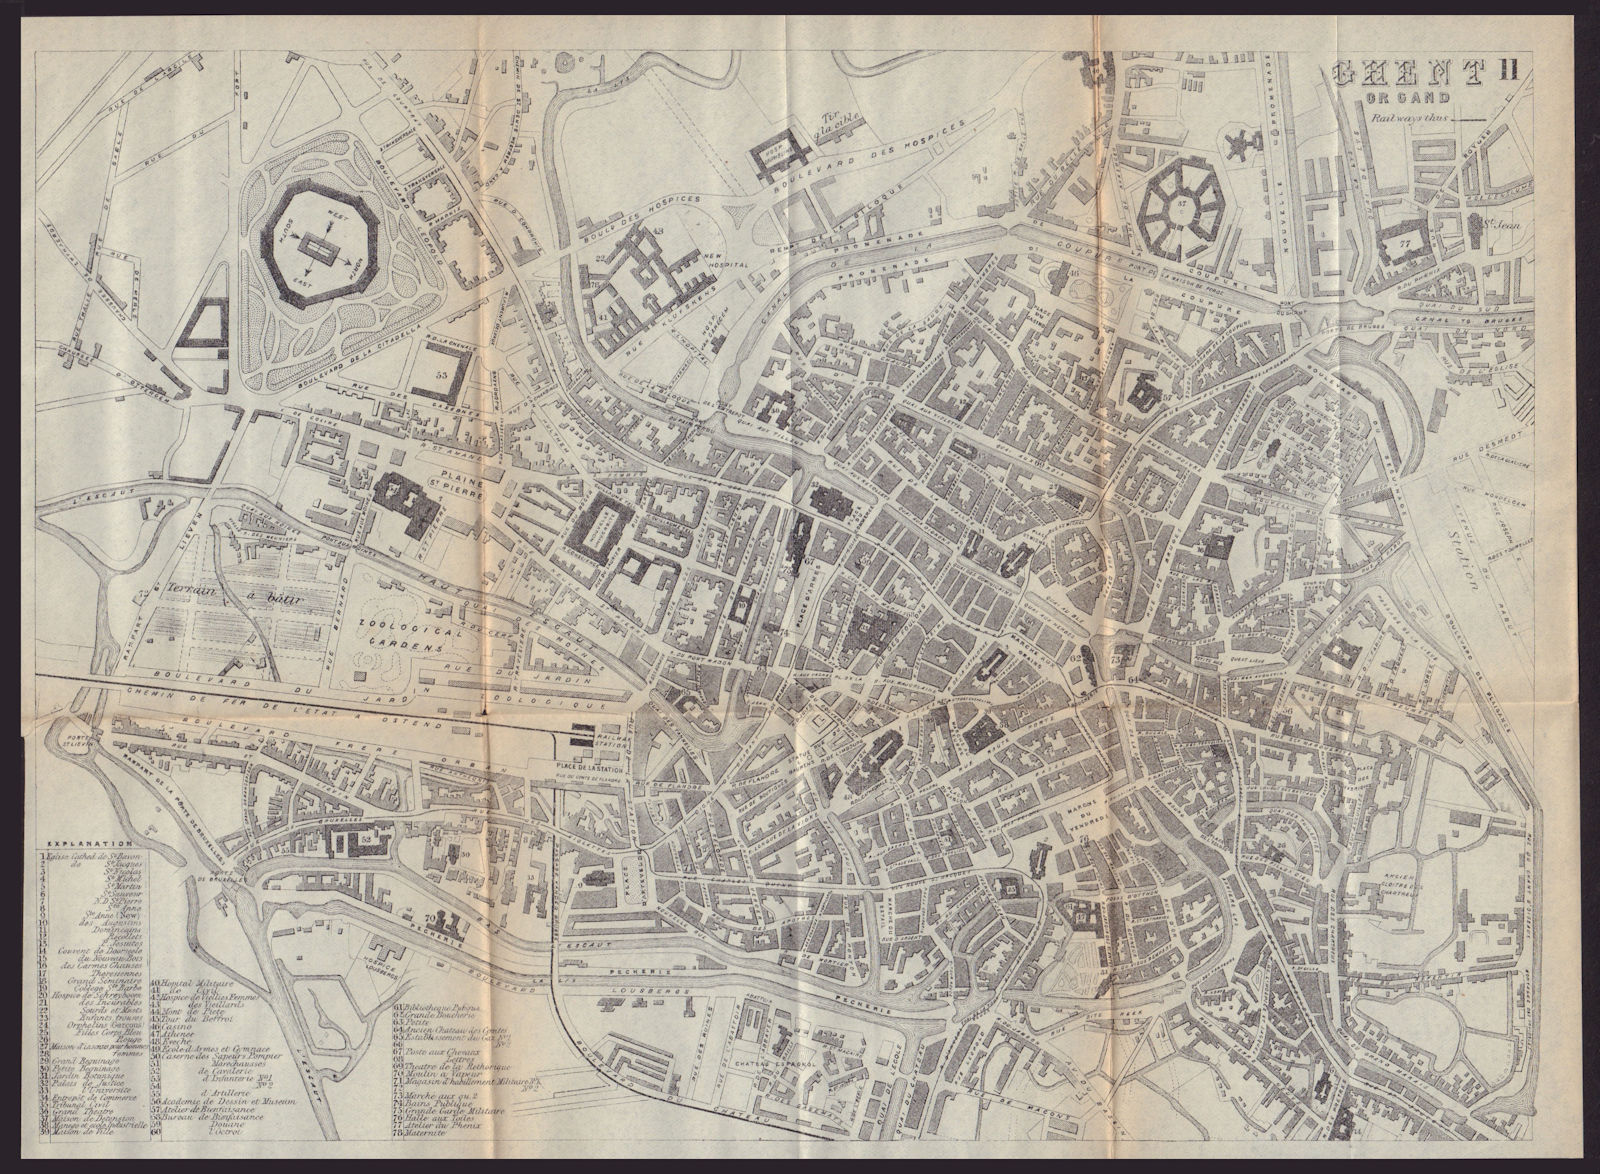 GHENT GENT GAND antique town plan city map. Belgium. BRADSHAW 1893 old